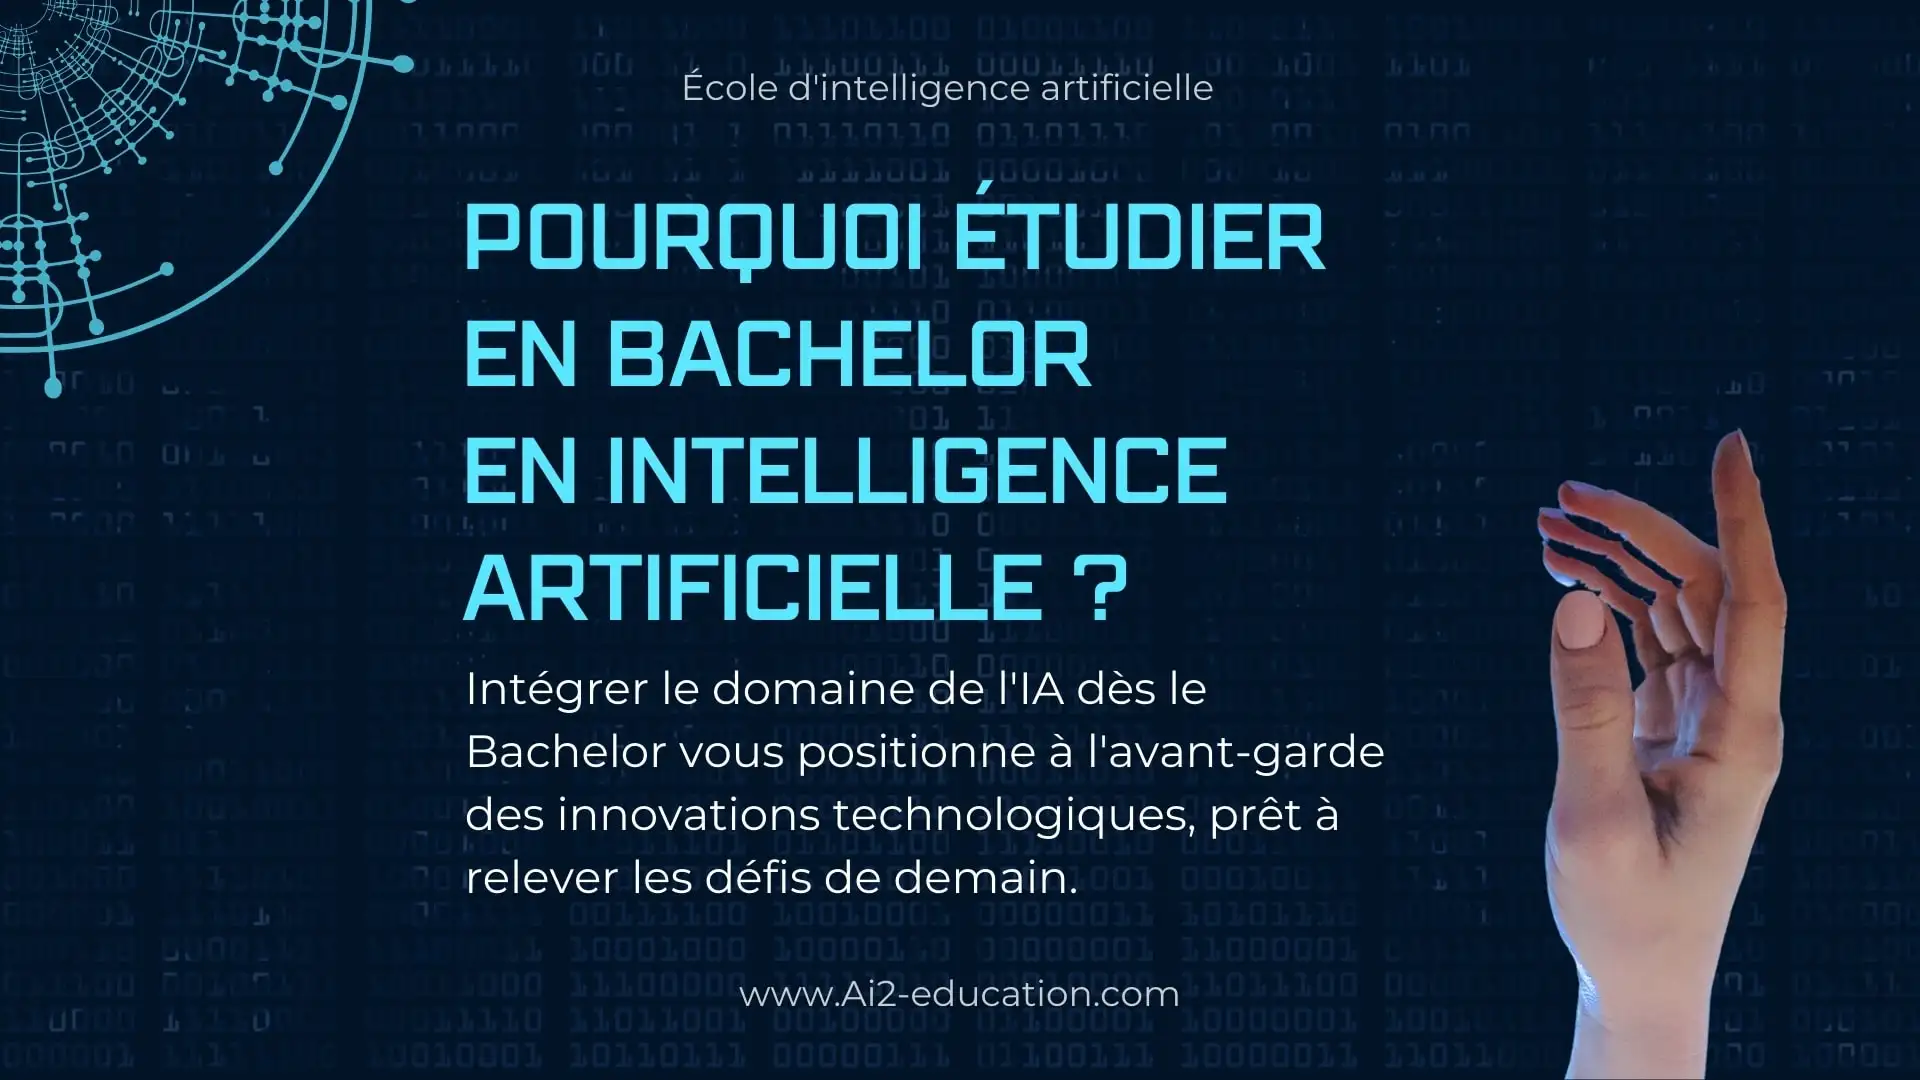 etudier-bachelor-intelligence-artificielle